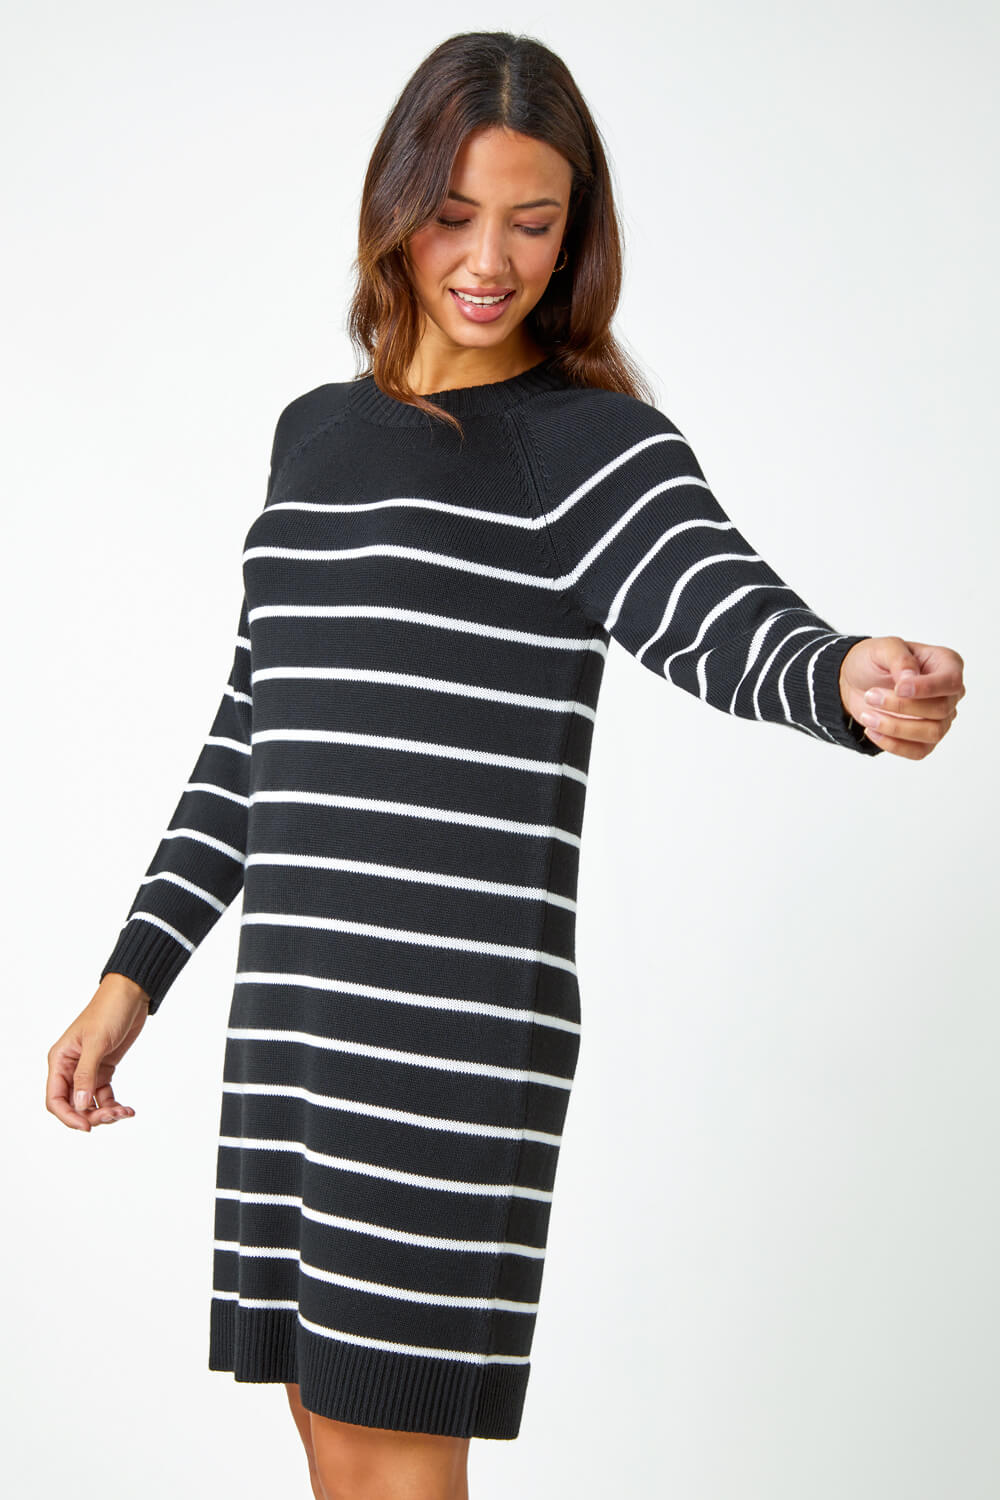 Black Stripe Print Knitted Jumper Dress, Image 4 of 5